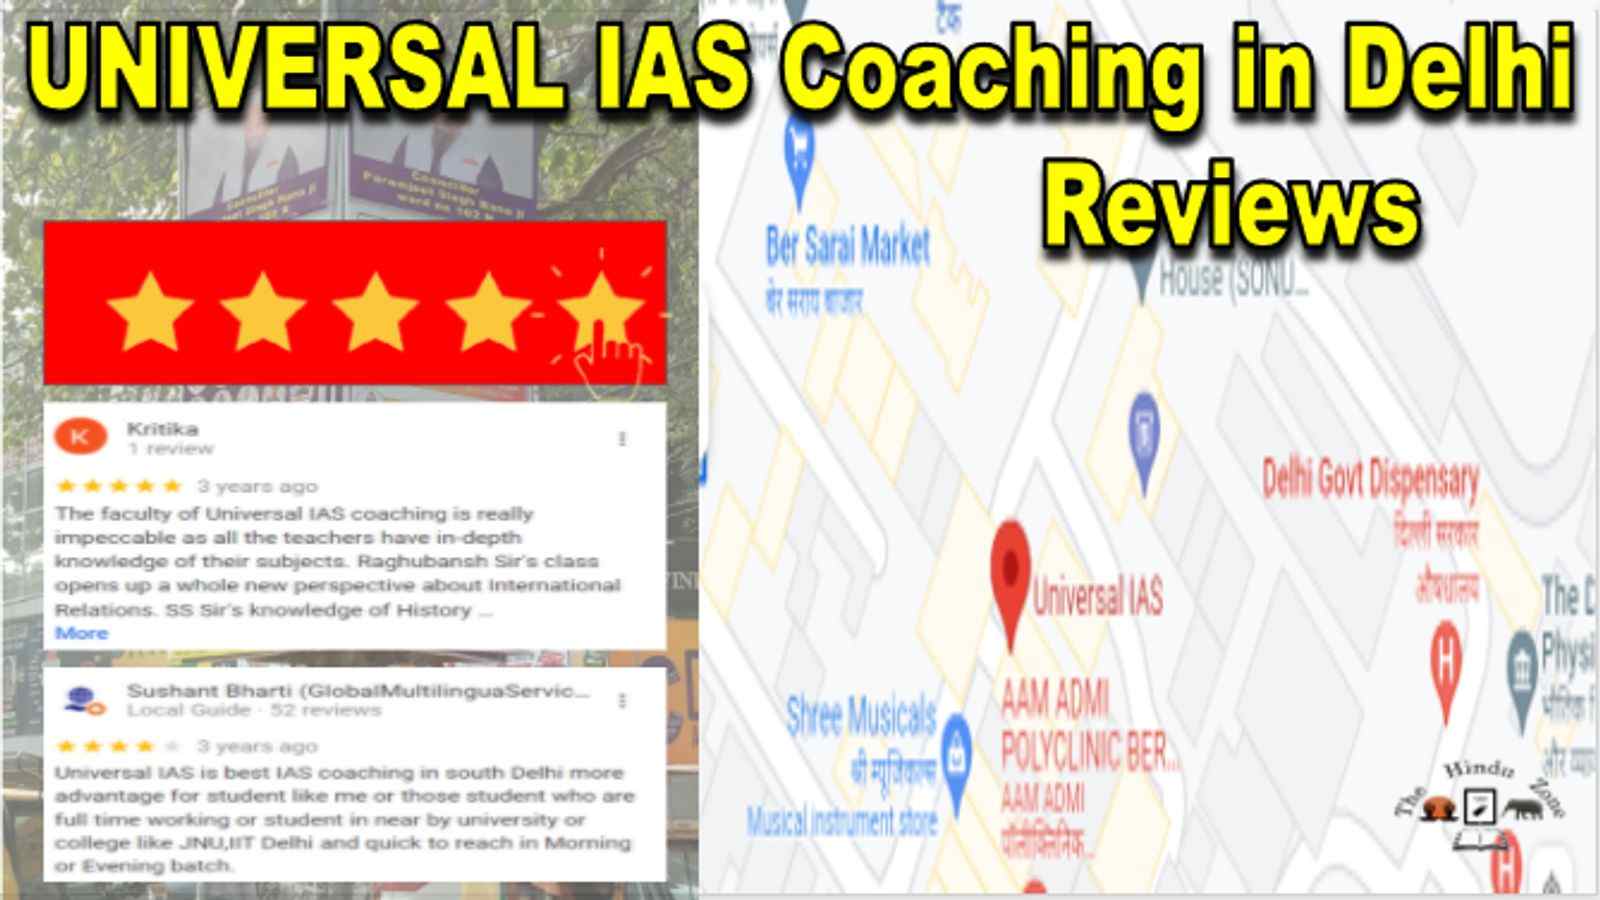 Universal IAS Coaching in Delhi Reviews